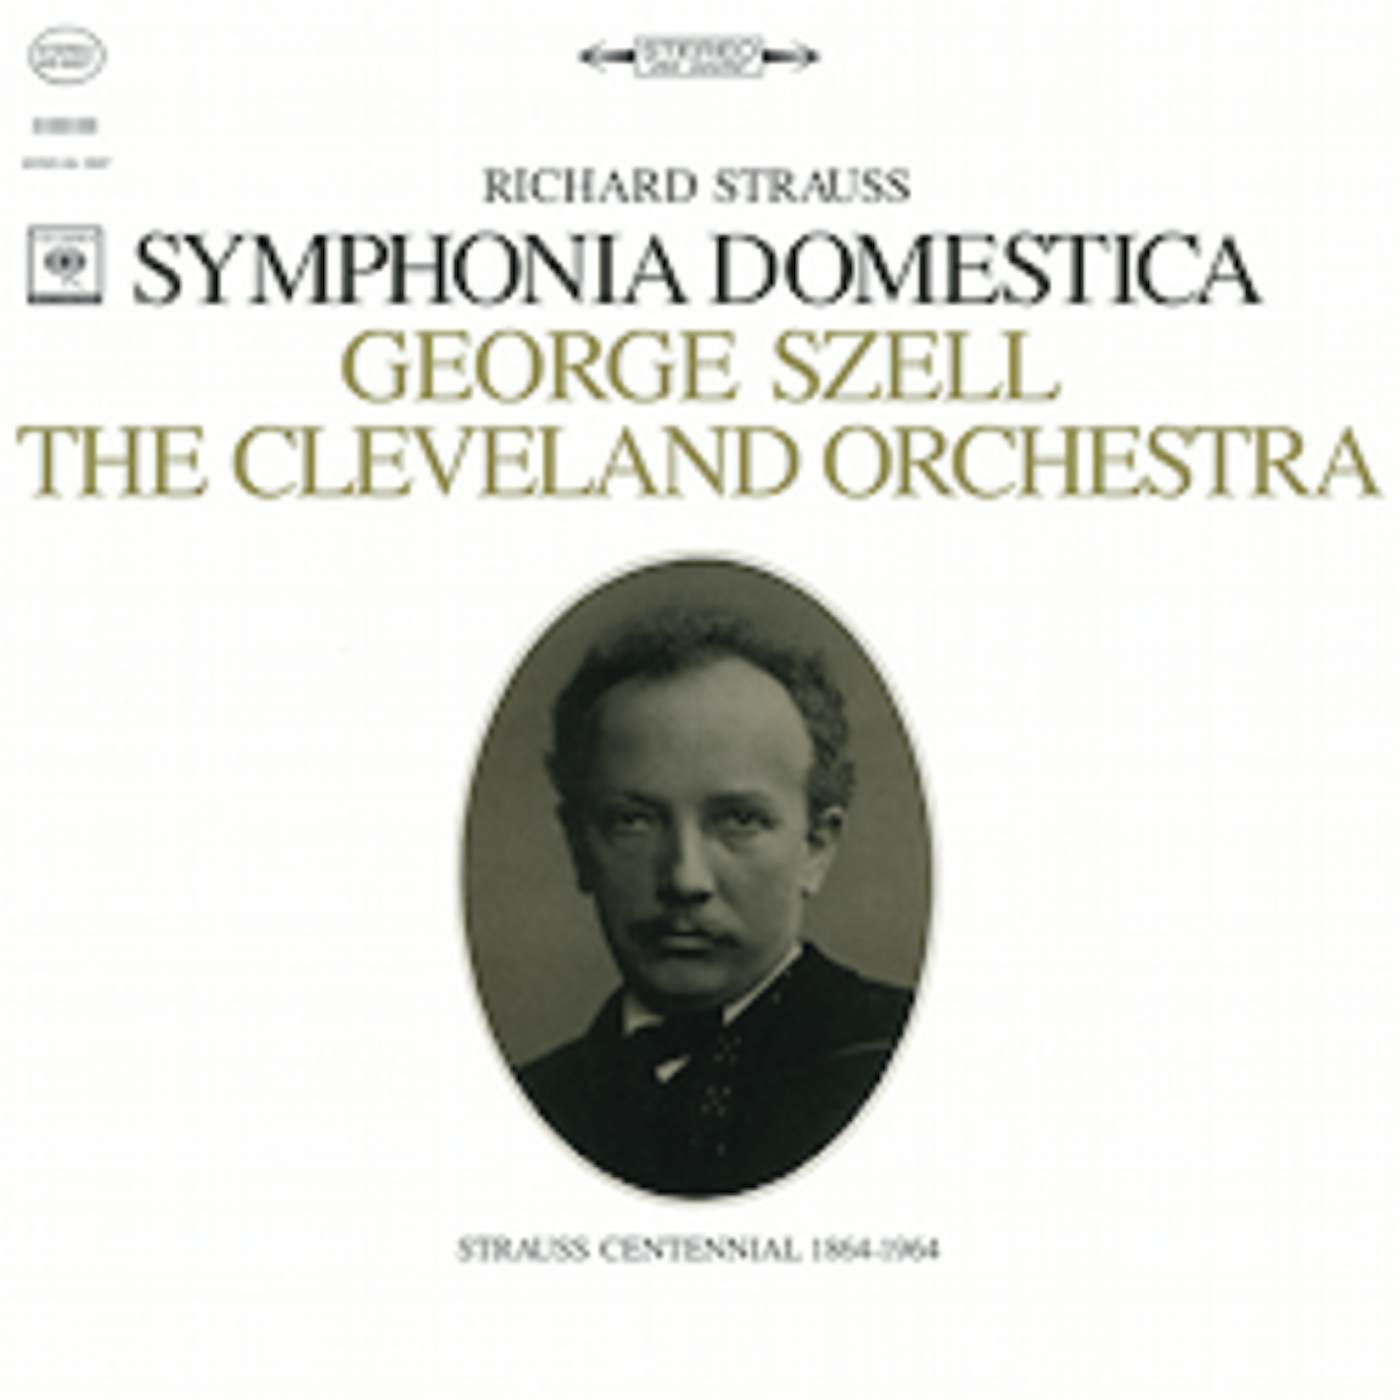 George Szell RICHARD STRAUSS - SYMPHONIA DOMESTICA (180G) Vinyl Record